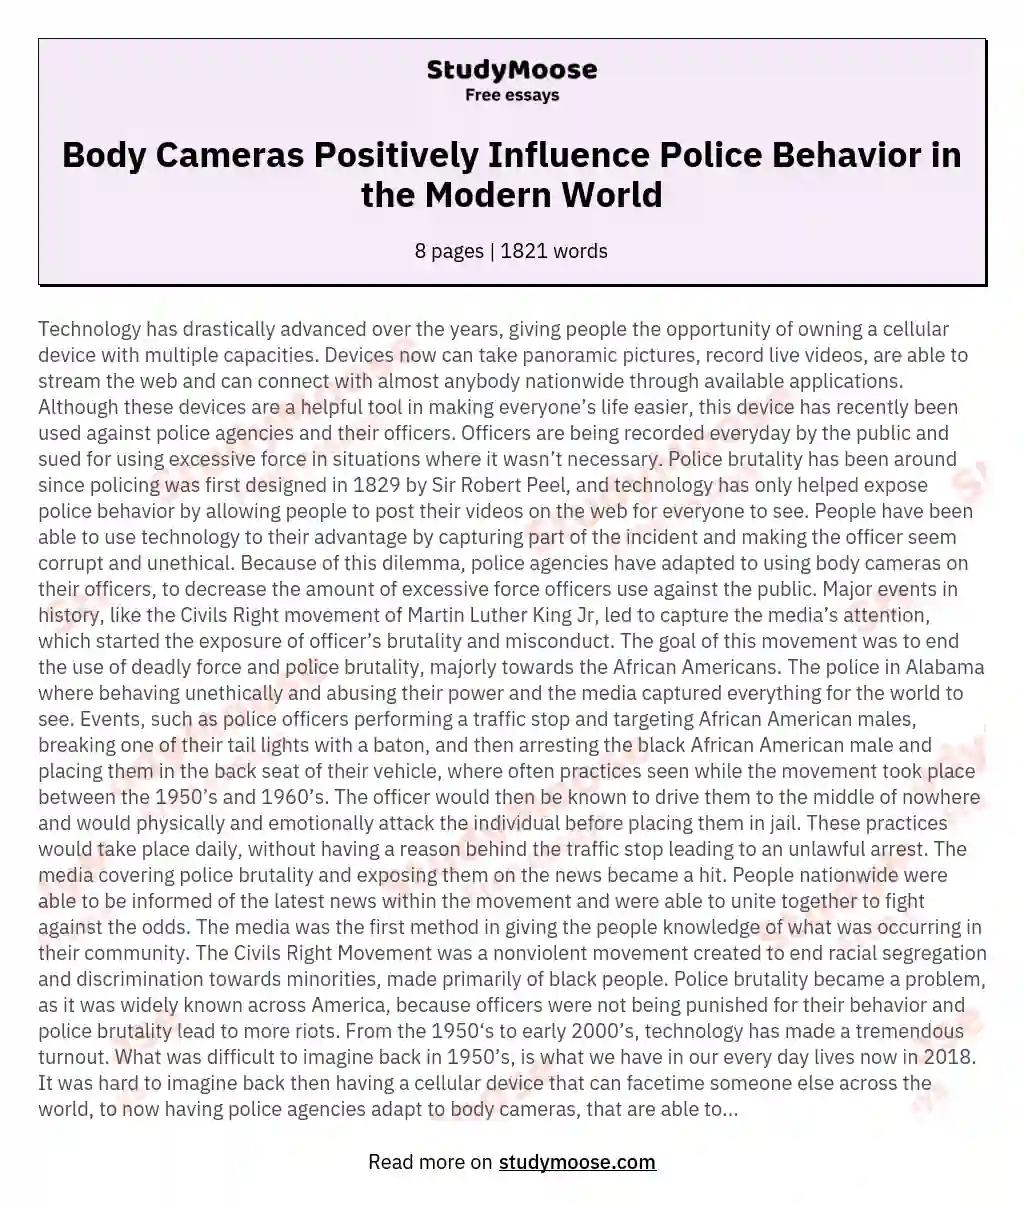 Body Cameras Positively Influence Police Behavior in the Modern World essay